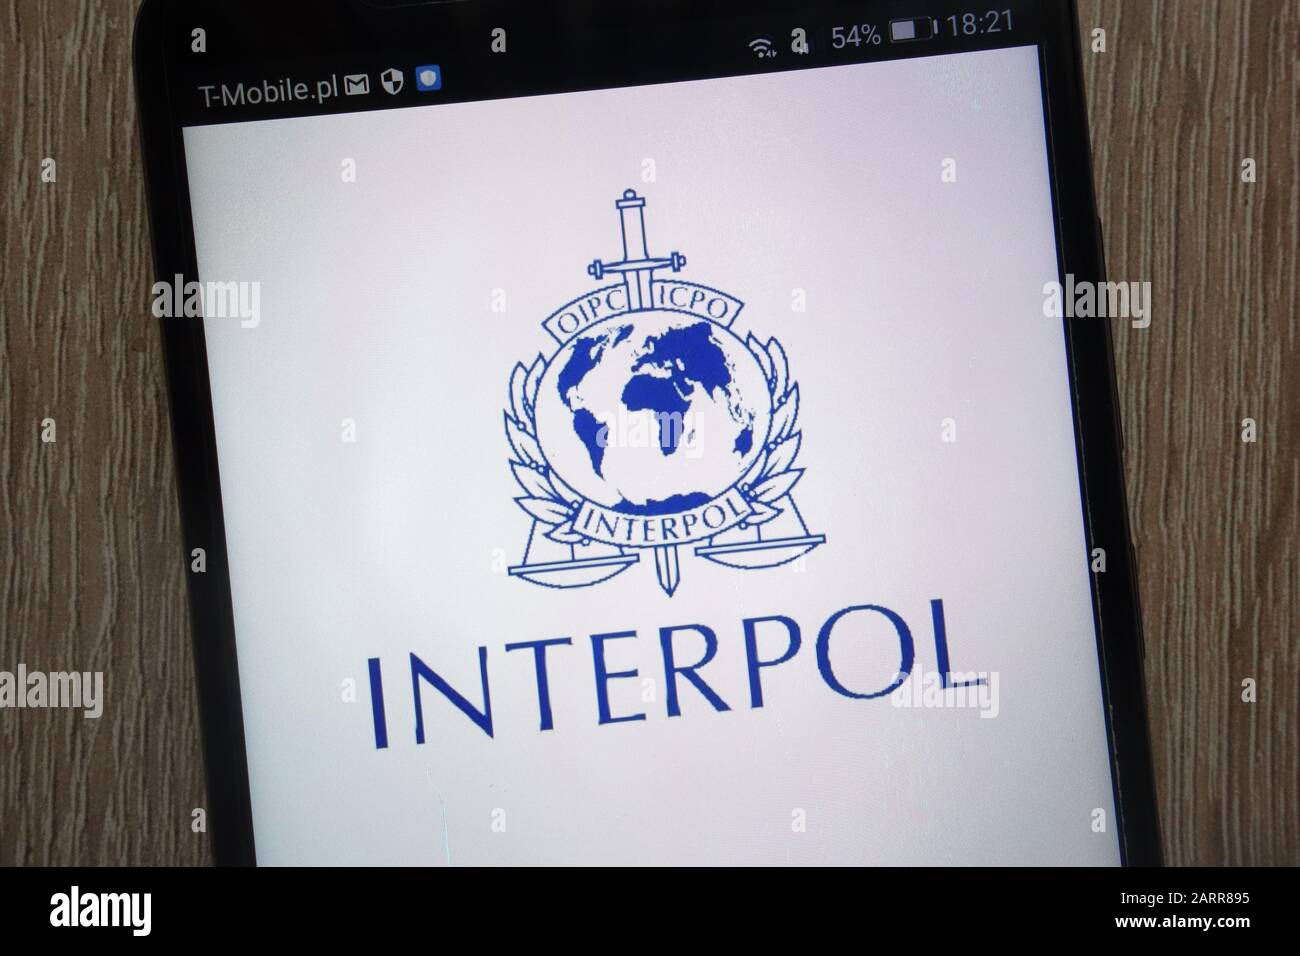 Logo Interpol (Organisation internationale de police criminelle) affiché sur un smartphone moderne Banque D'Images